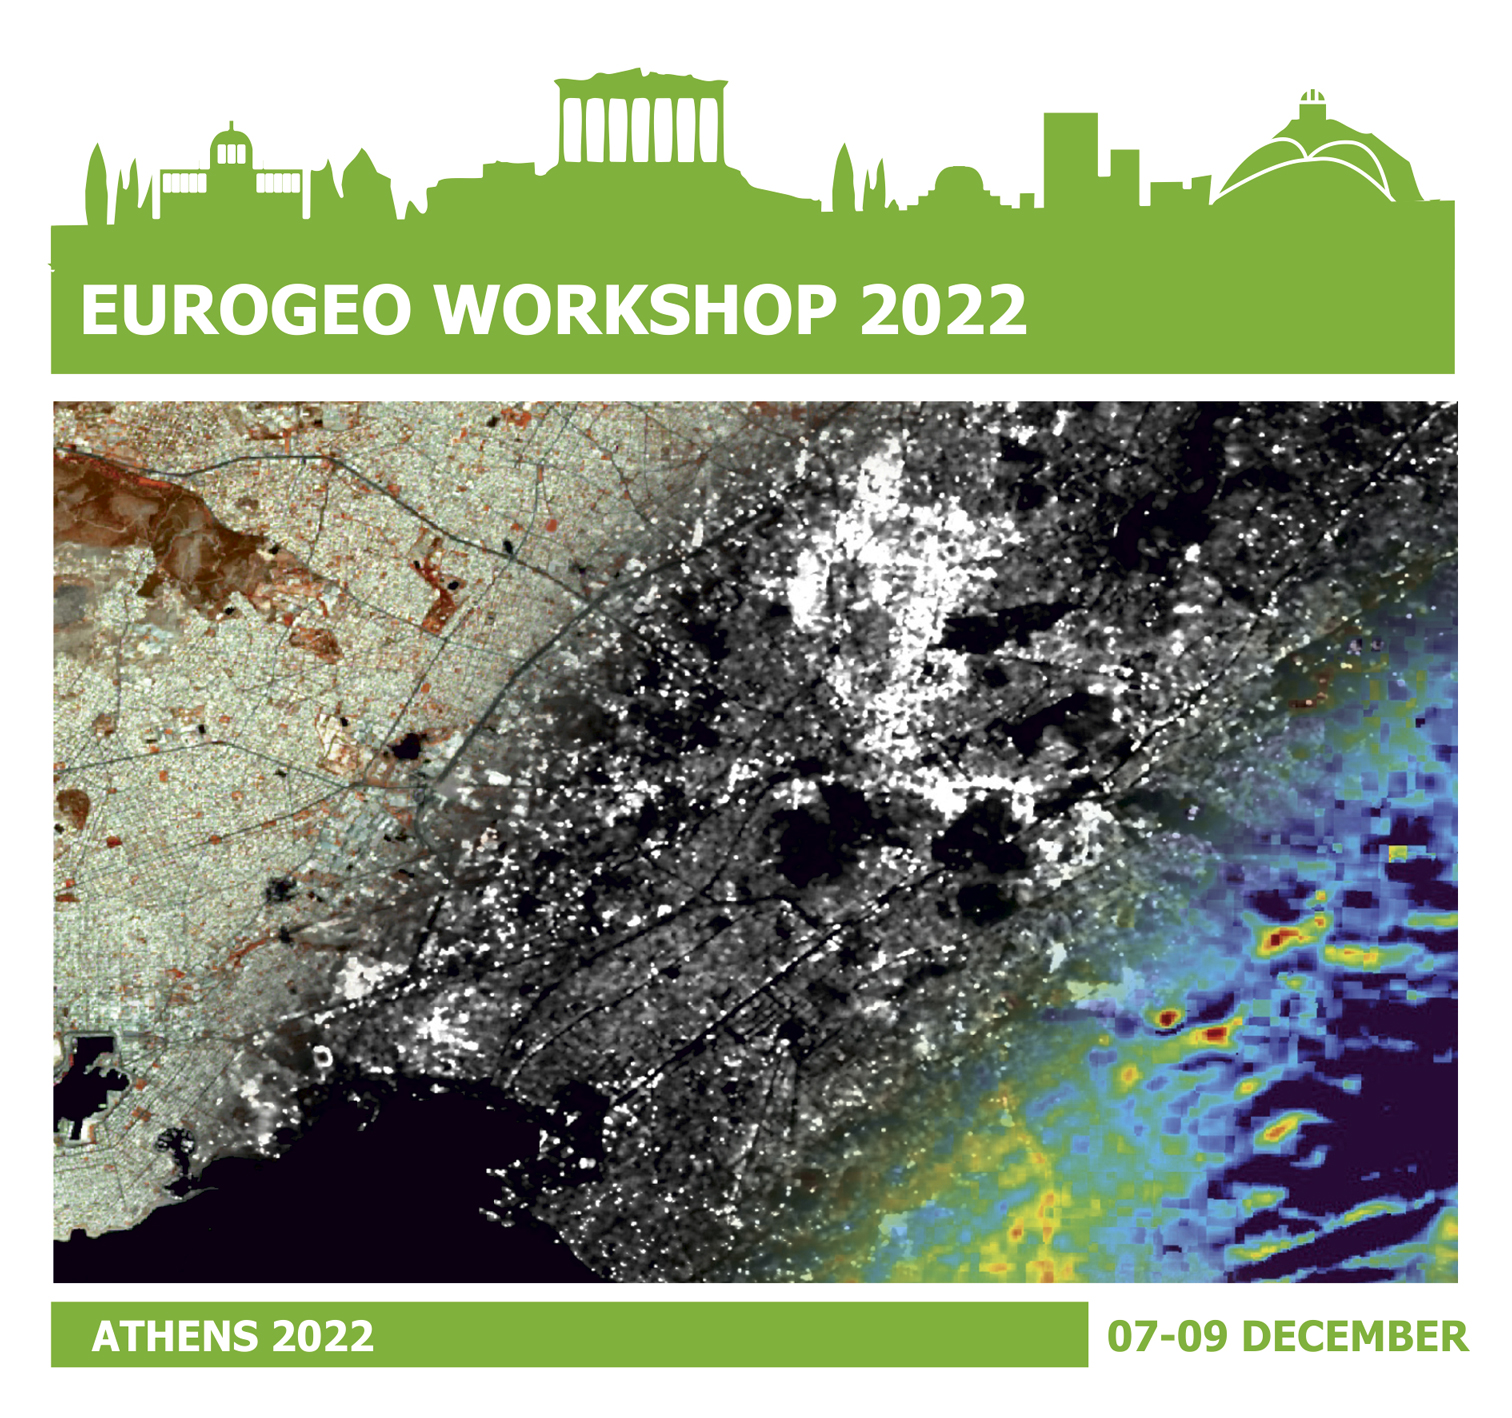 Eurogeo workshop 2022